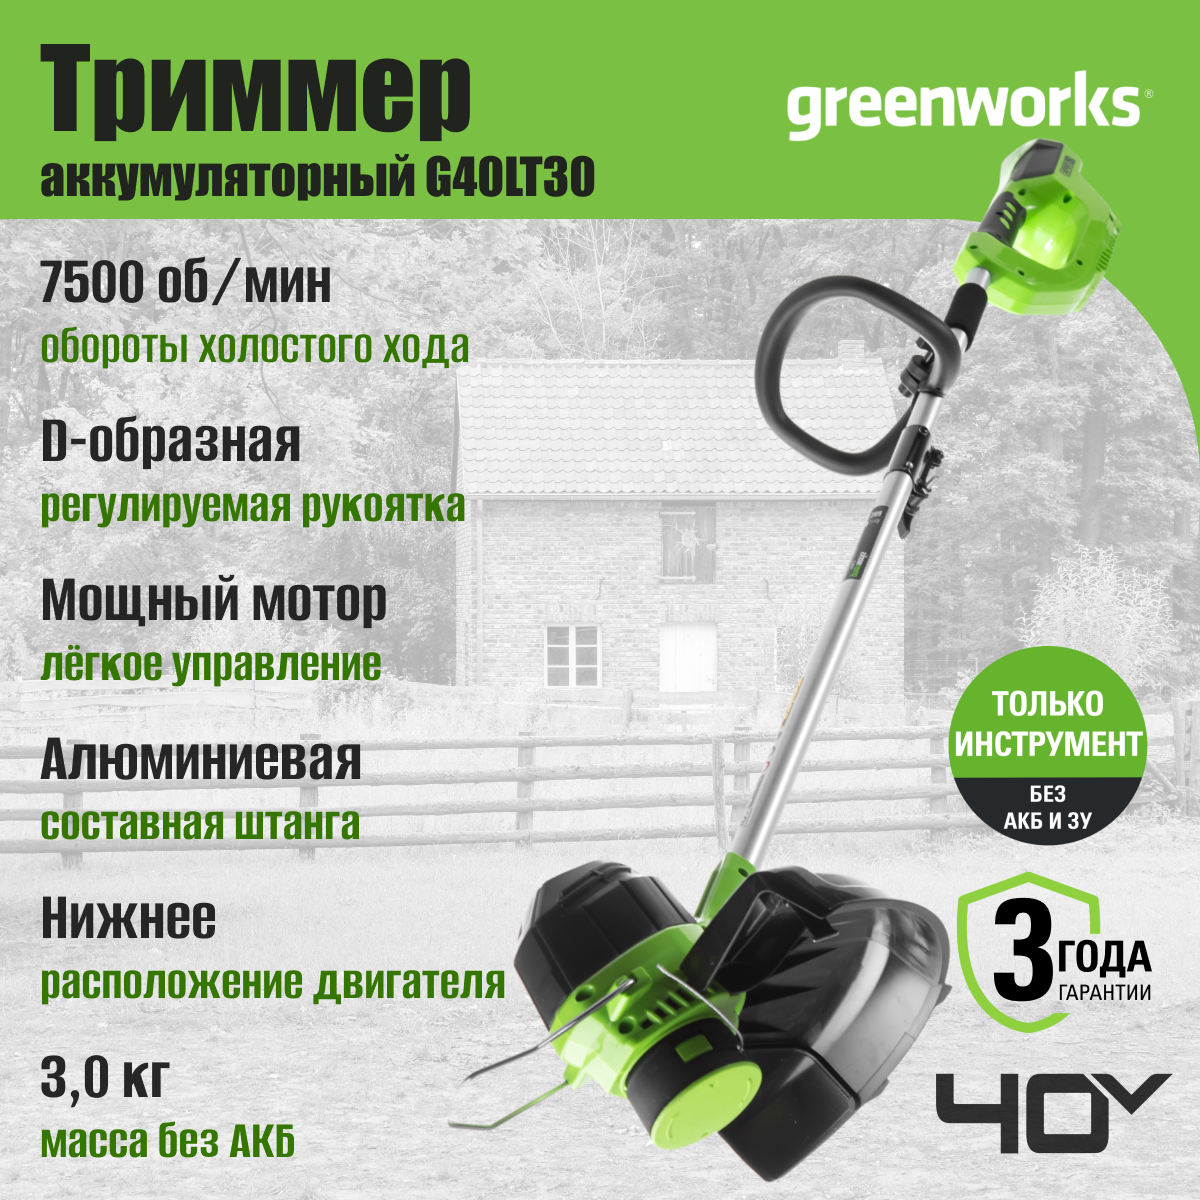 Триммер аккумуляторный Greenworks Арт. 2101507, 40V, 30 см, без АКБ и ЗУ